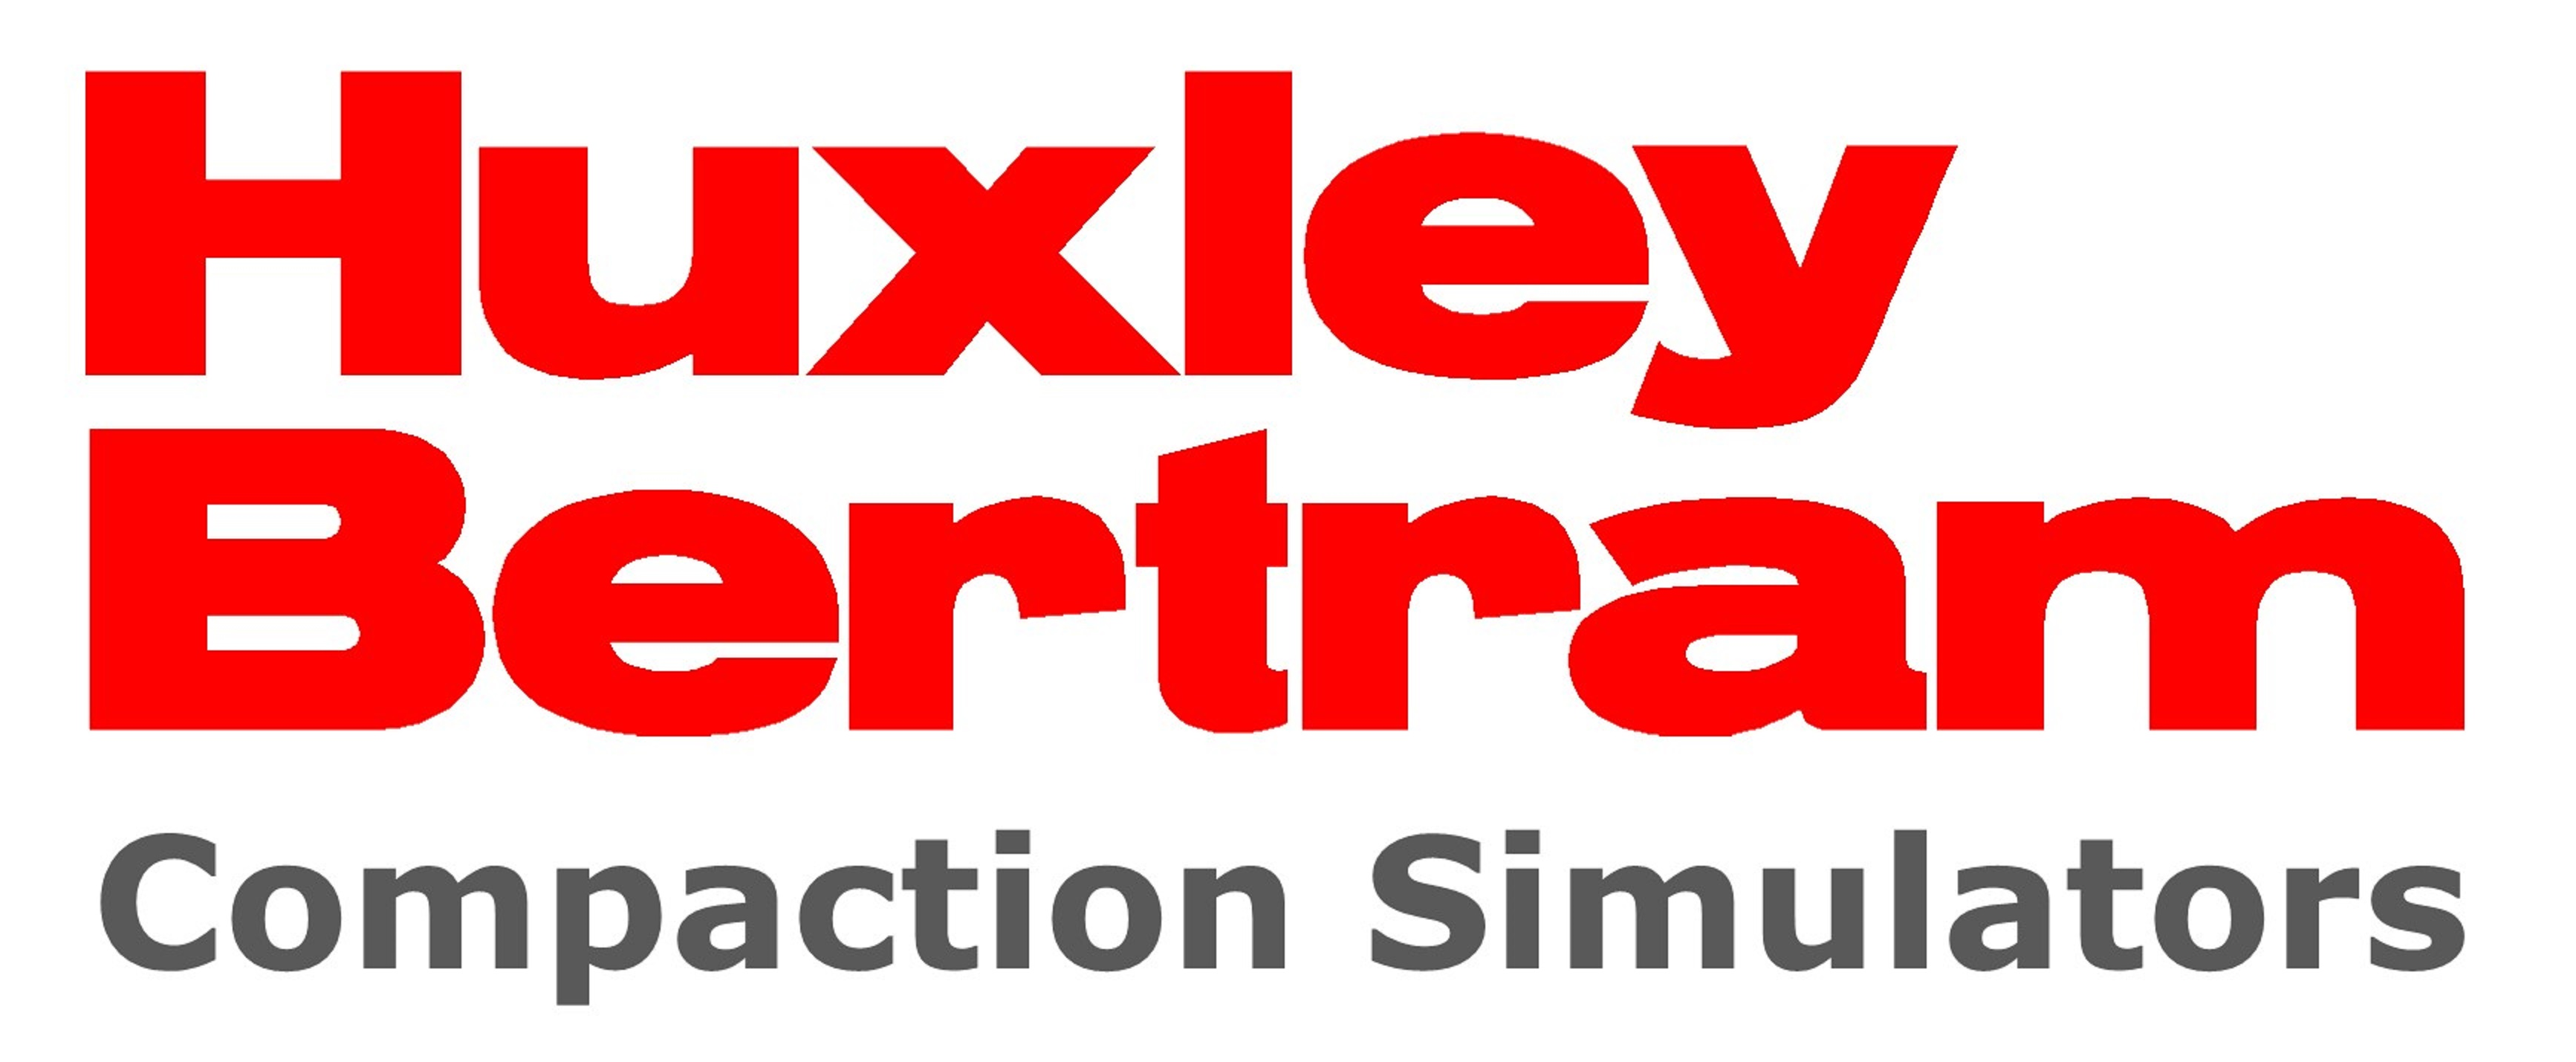 Huxley Bertram Tablet Formulation Development